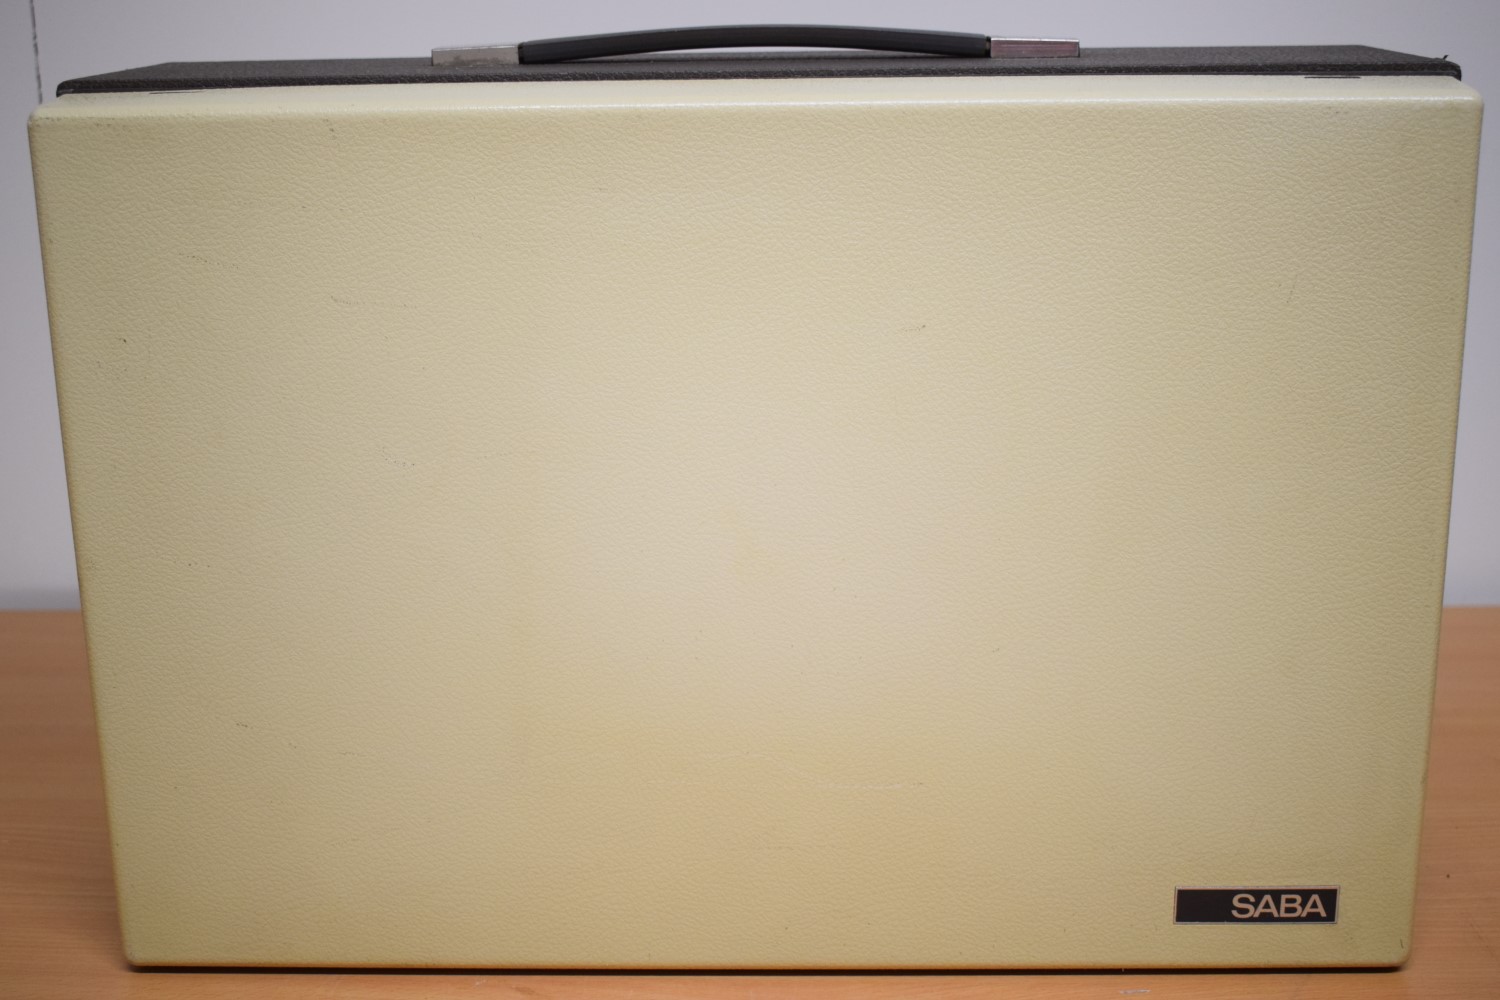 Saba TG 440 automatic Tape Recorder